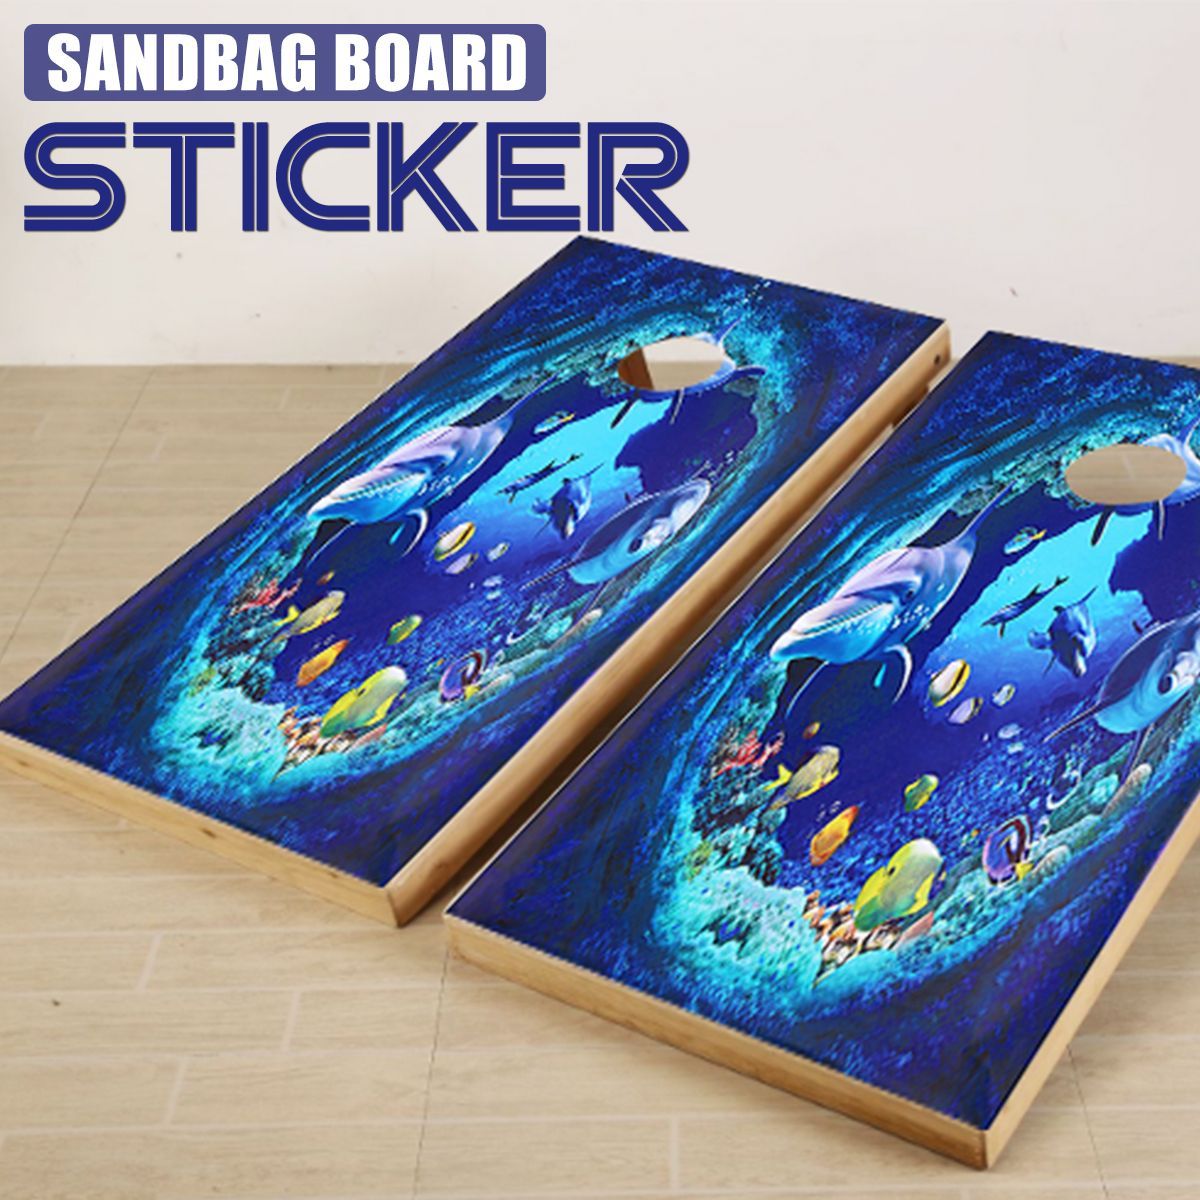 Corn-Hole-Self-Adhesive-Wall-Sticker-Cornhole-Board-Sand-Bag-Toss-Game-Vinyl-Decal-Decorations-1555750